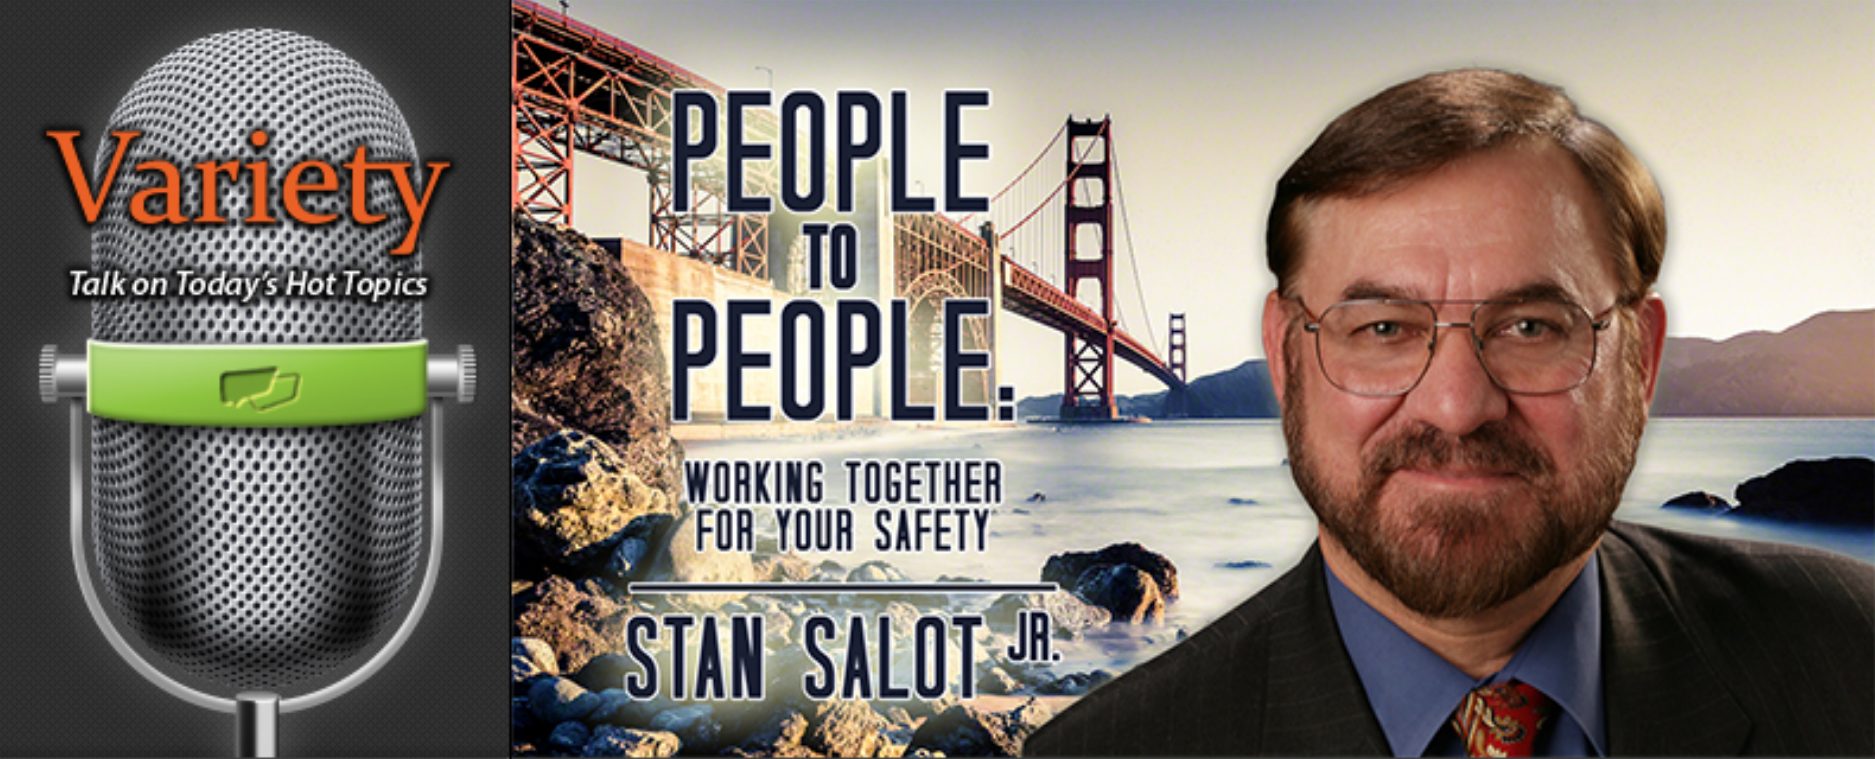 Stan Salot.com